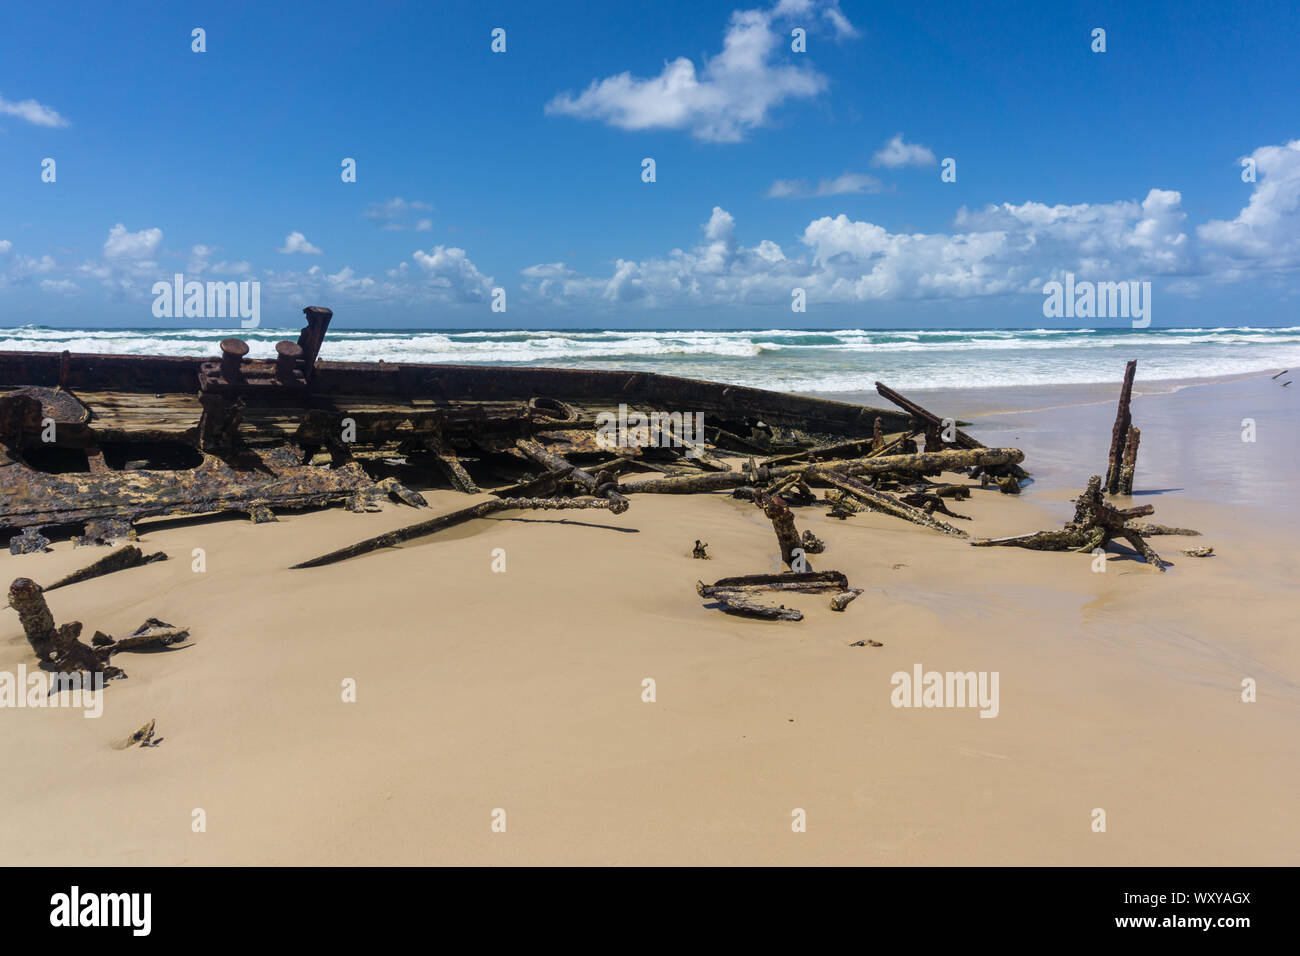 Historische ss maheno Wrack fraser island in Australien Stockfoto